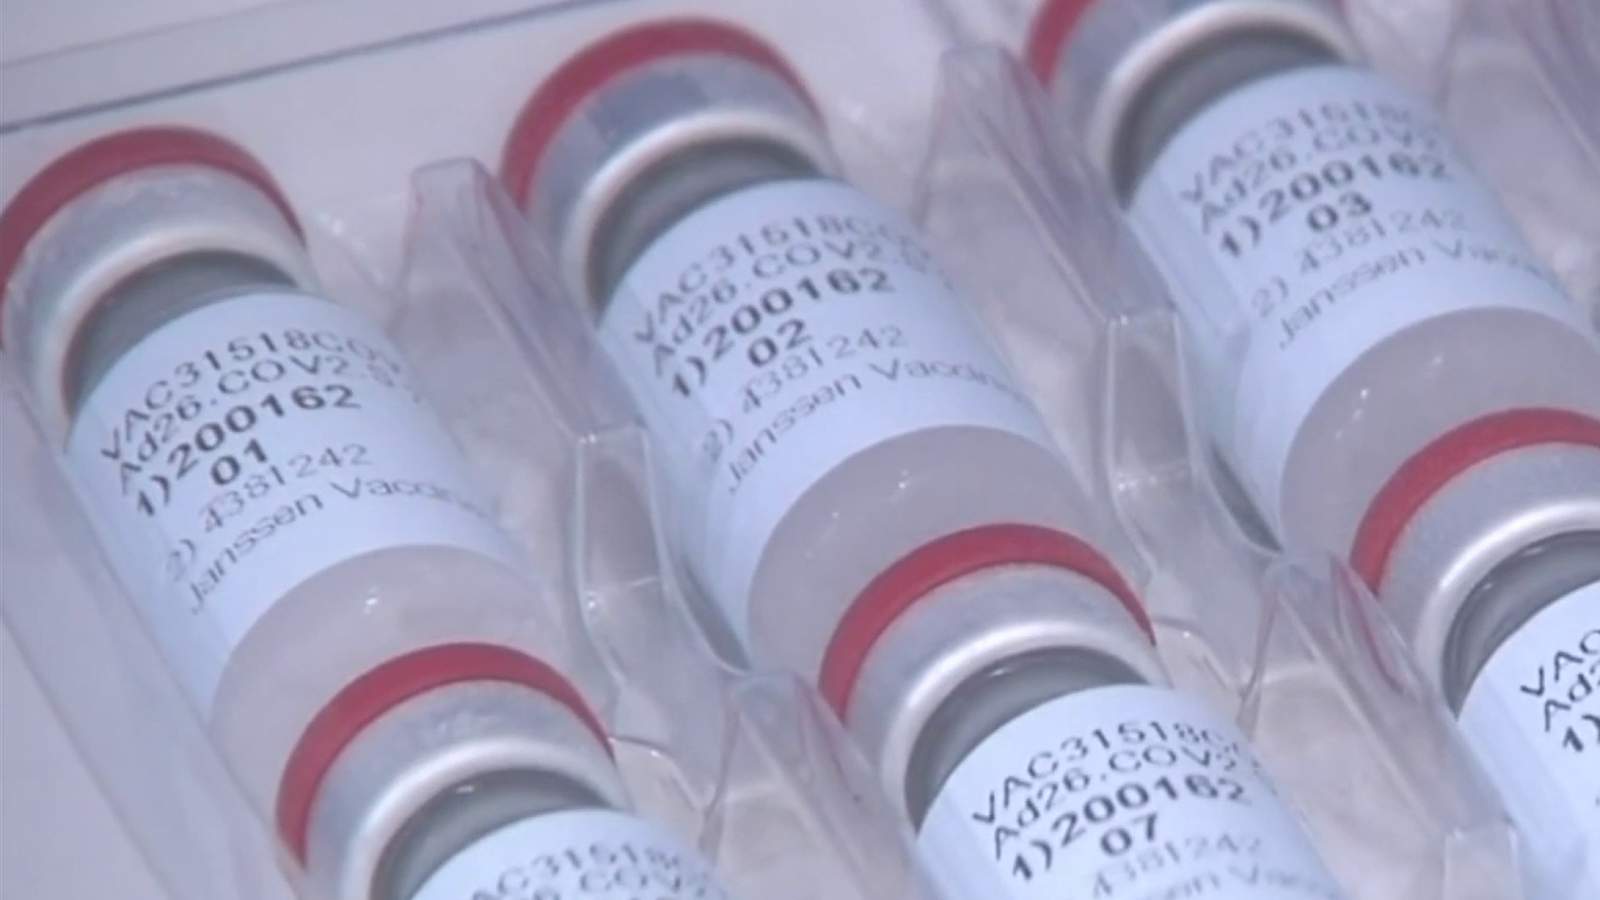 Carilion Clinic leaders assure Johnson and Johnson vaccine safety amid concerns